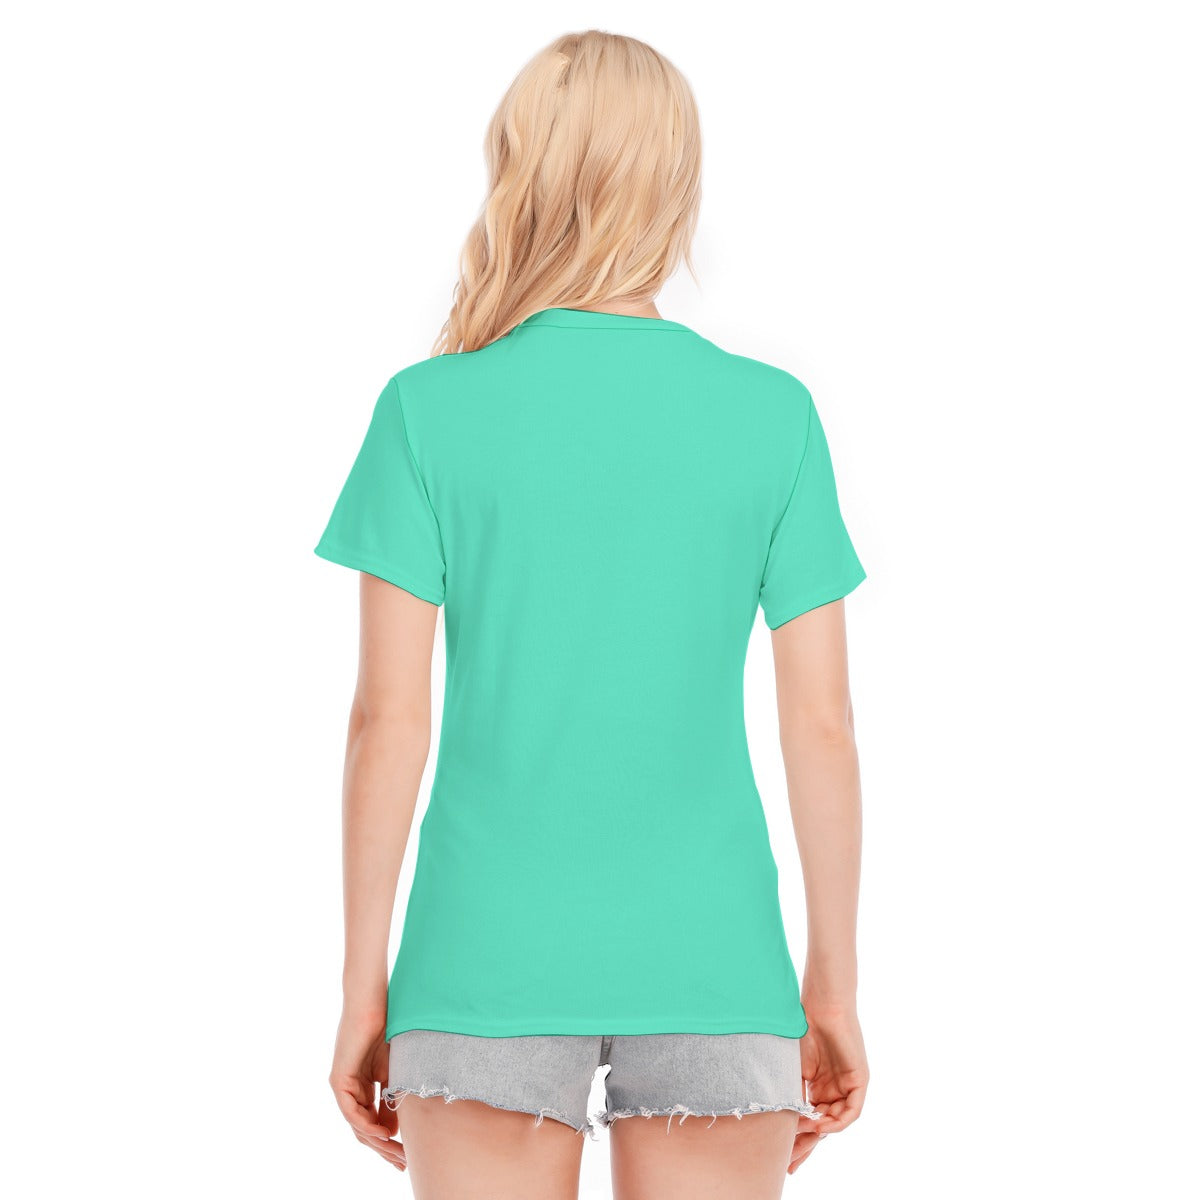 👚 Oficialmente Sexy Turquoise Green With White Logo Women's Round Neck T-Shirt | 190GSM CottonColor #50E3C2 👚